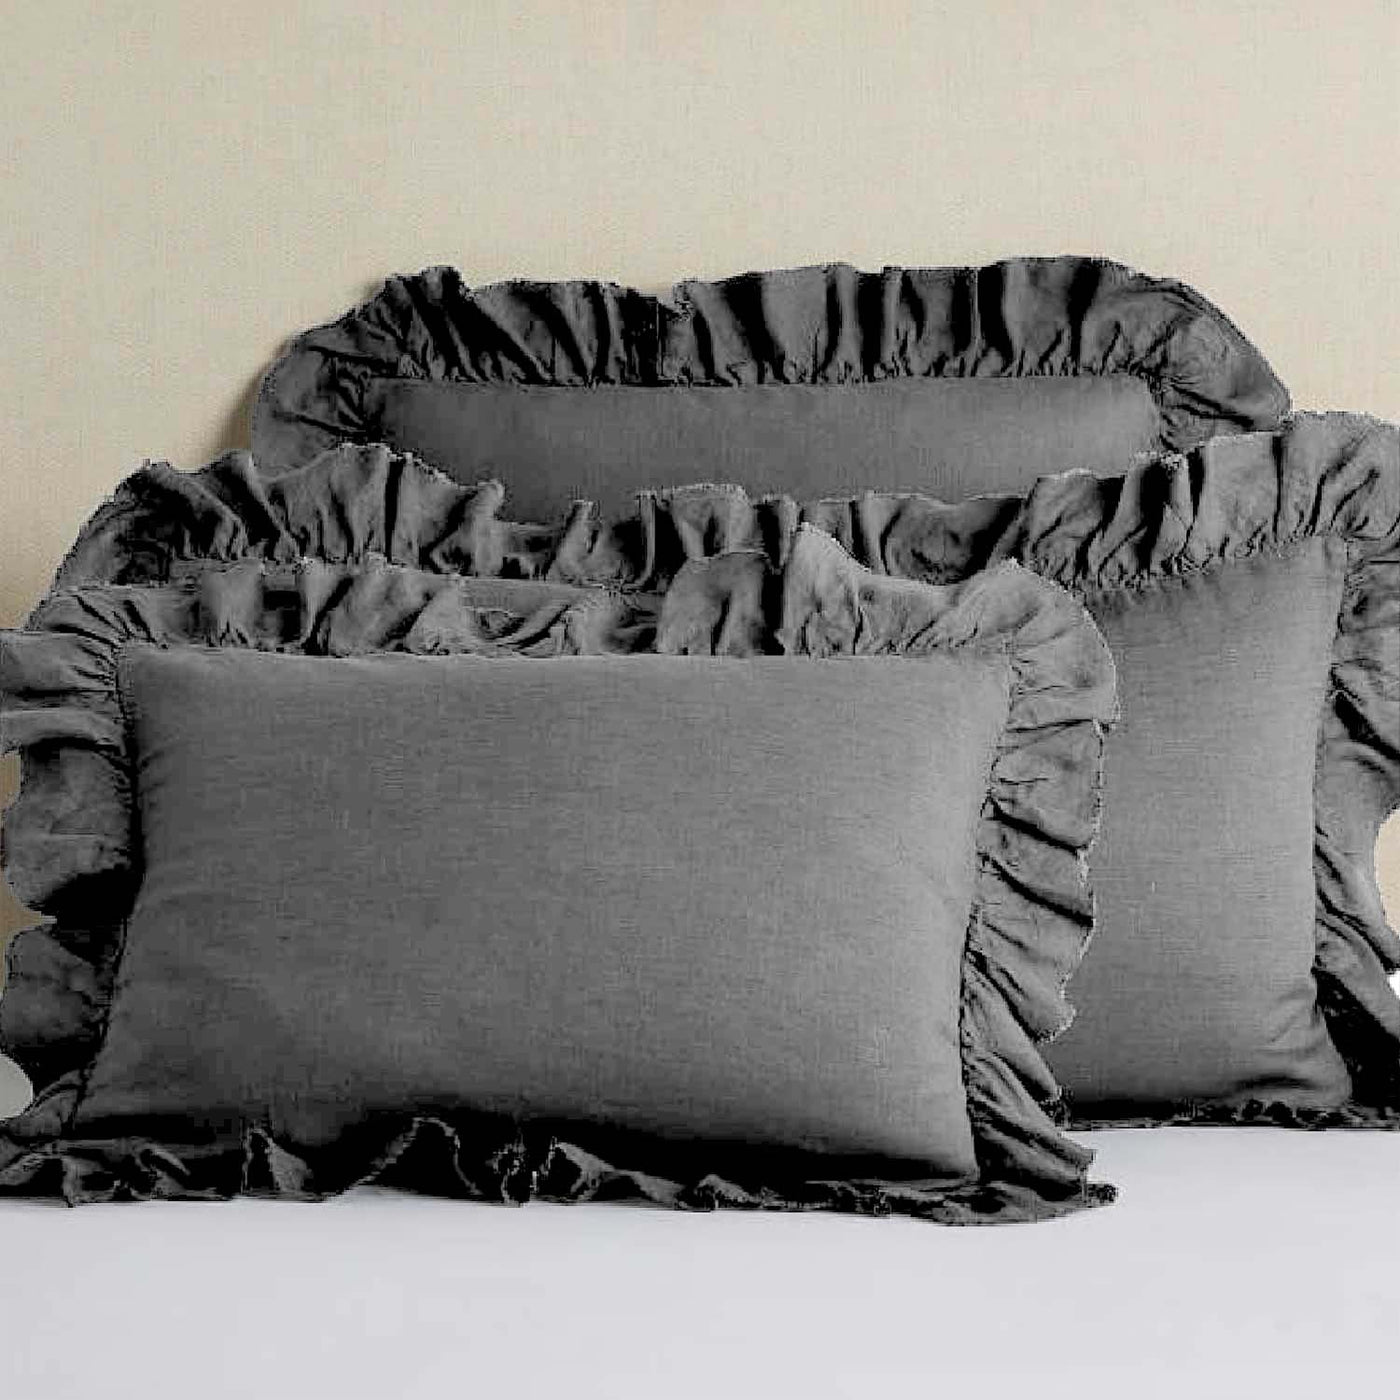 Set Of 2 Egyptian Cotton Ruffled Pillow Shams